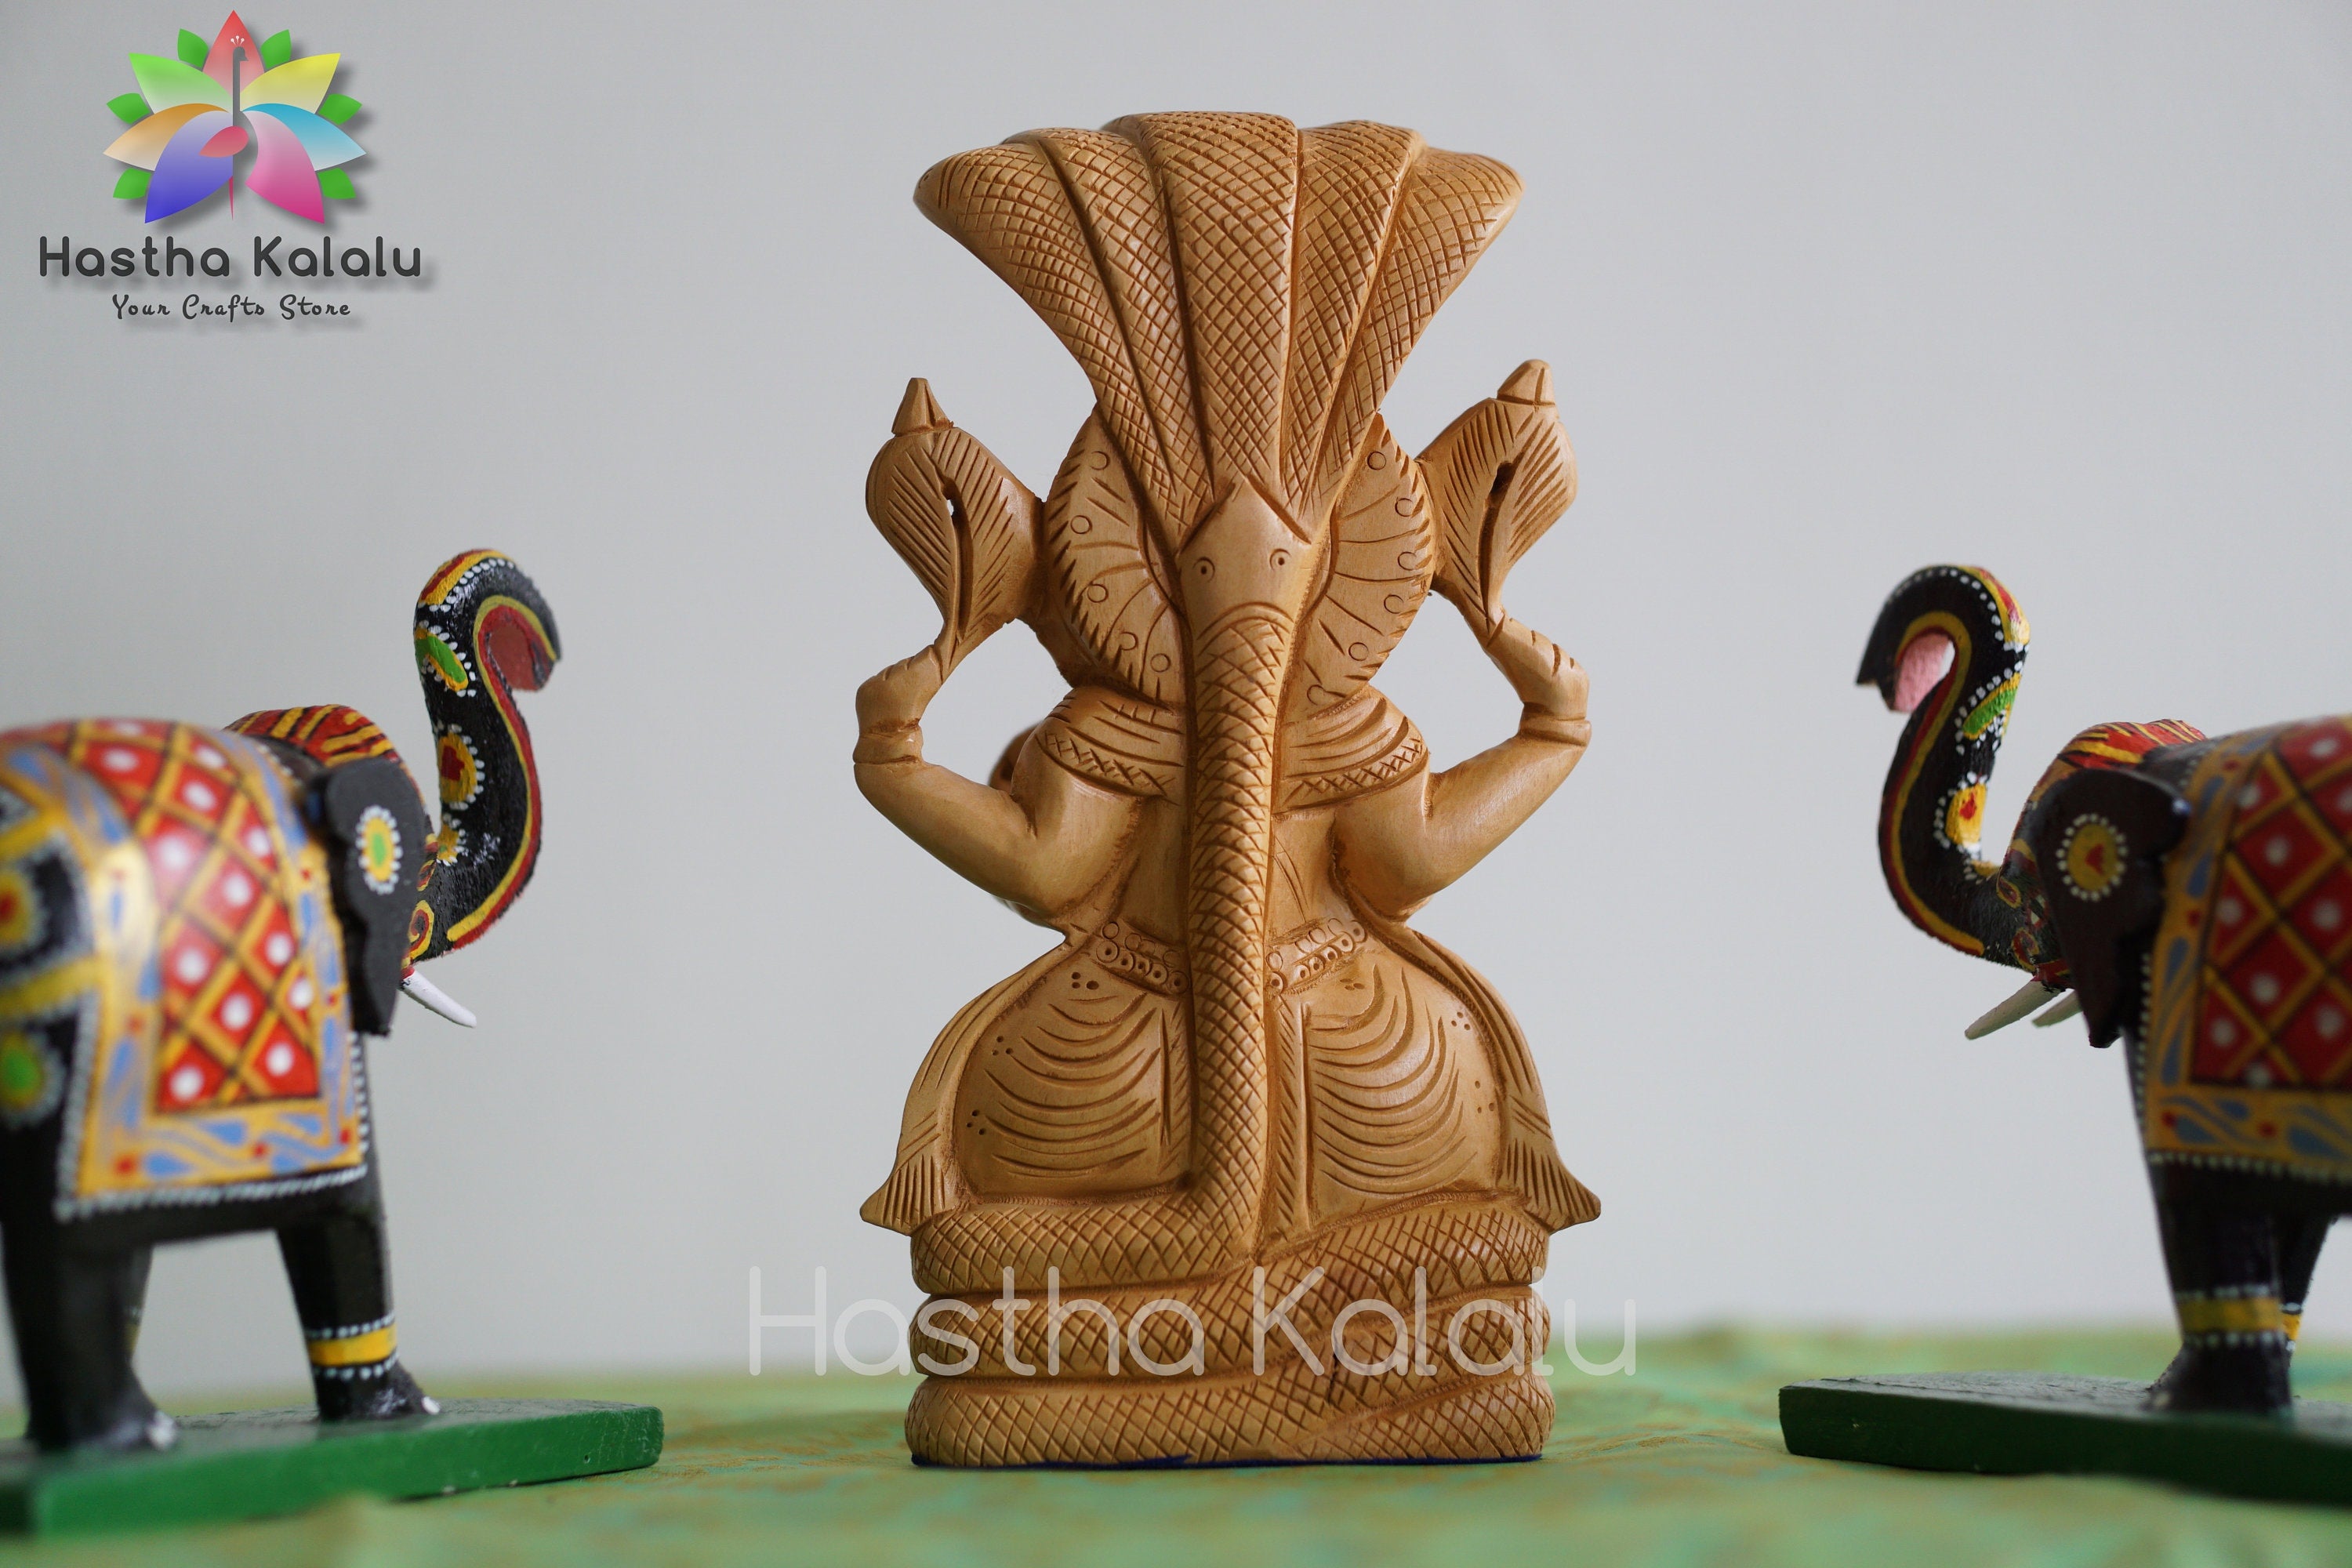 Wooden Handmade Superfine Carving Ganesha Figurine